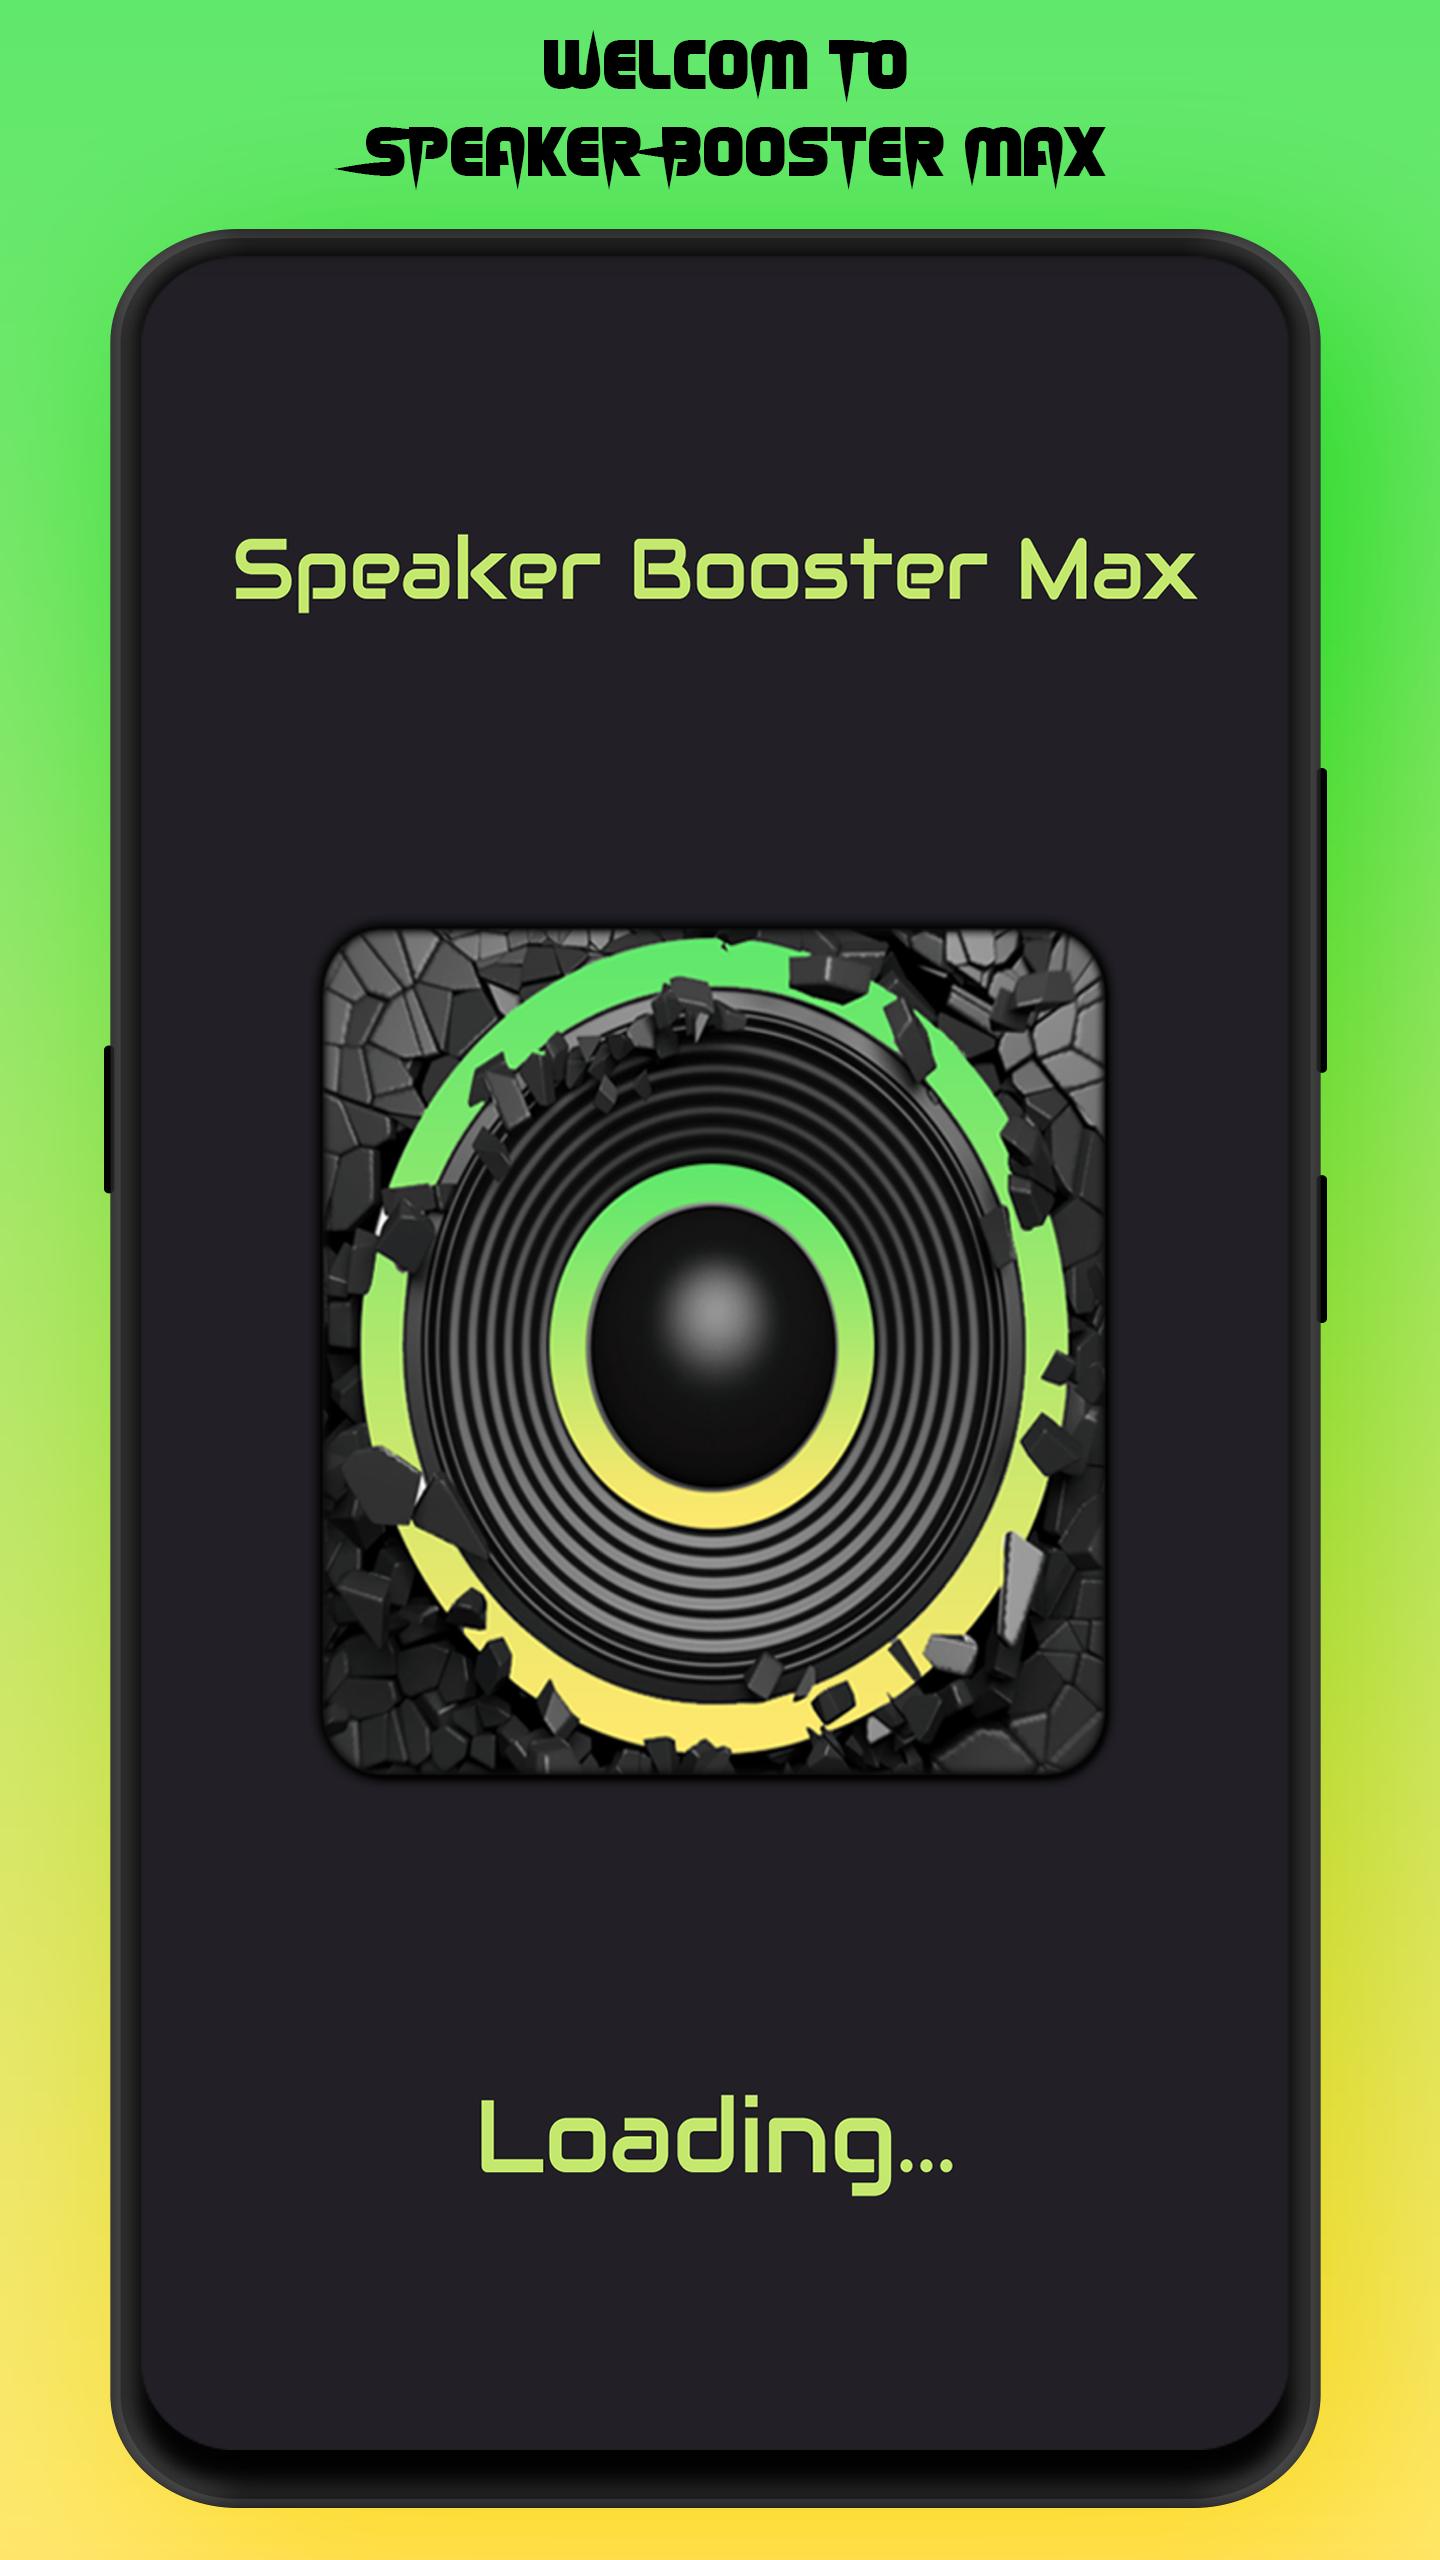 مكبر الصوت ماكس for Android - APK Download